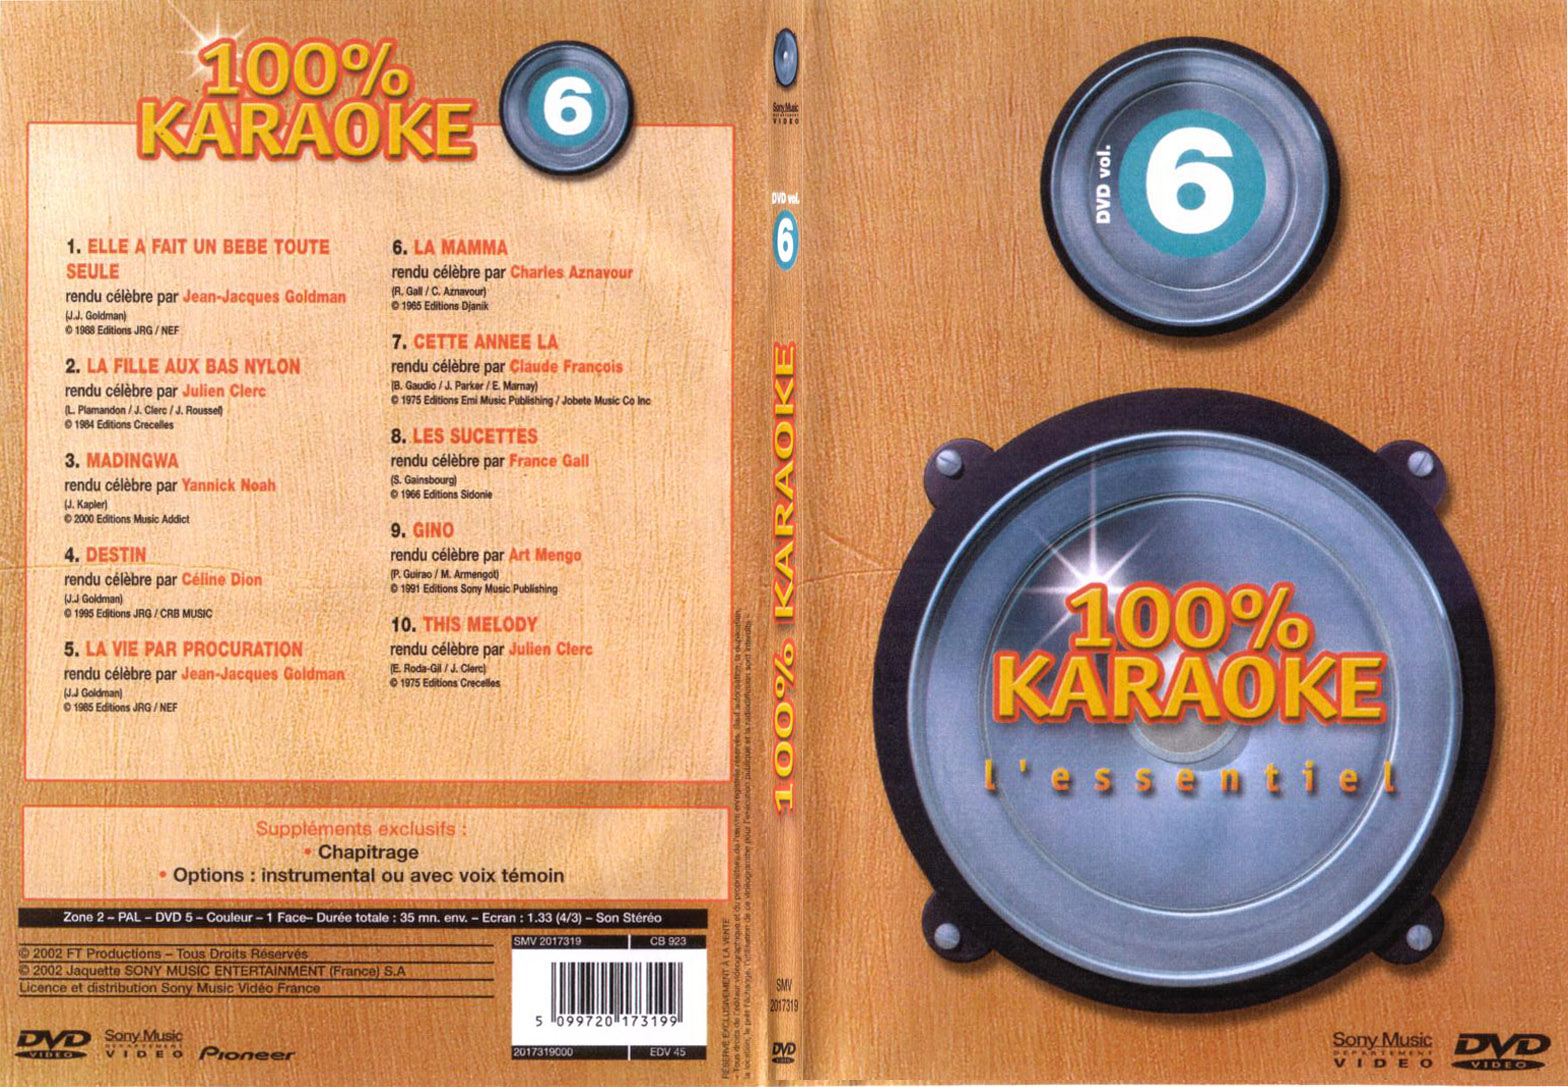 Jaquette DVD 10100 karaoke vol 6 - SLIM